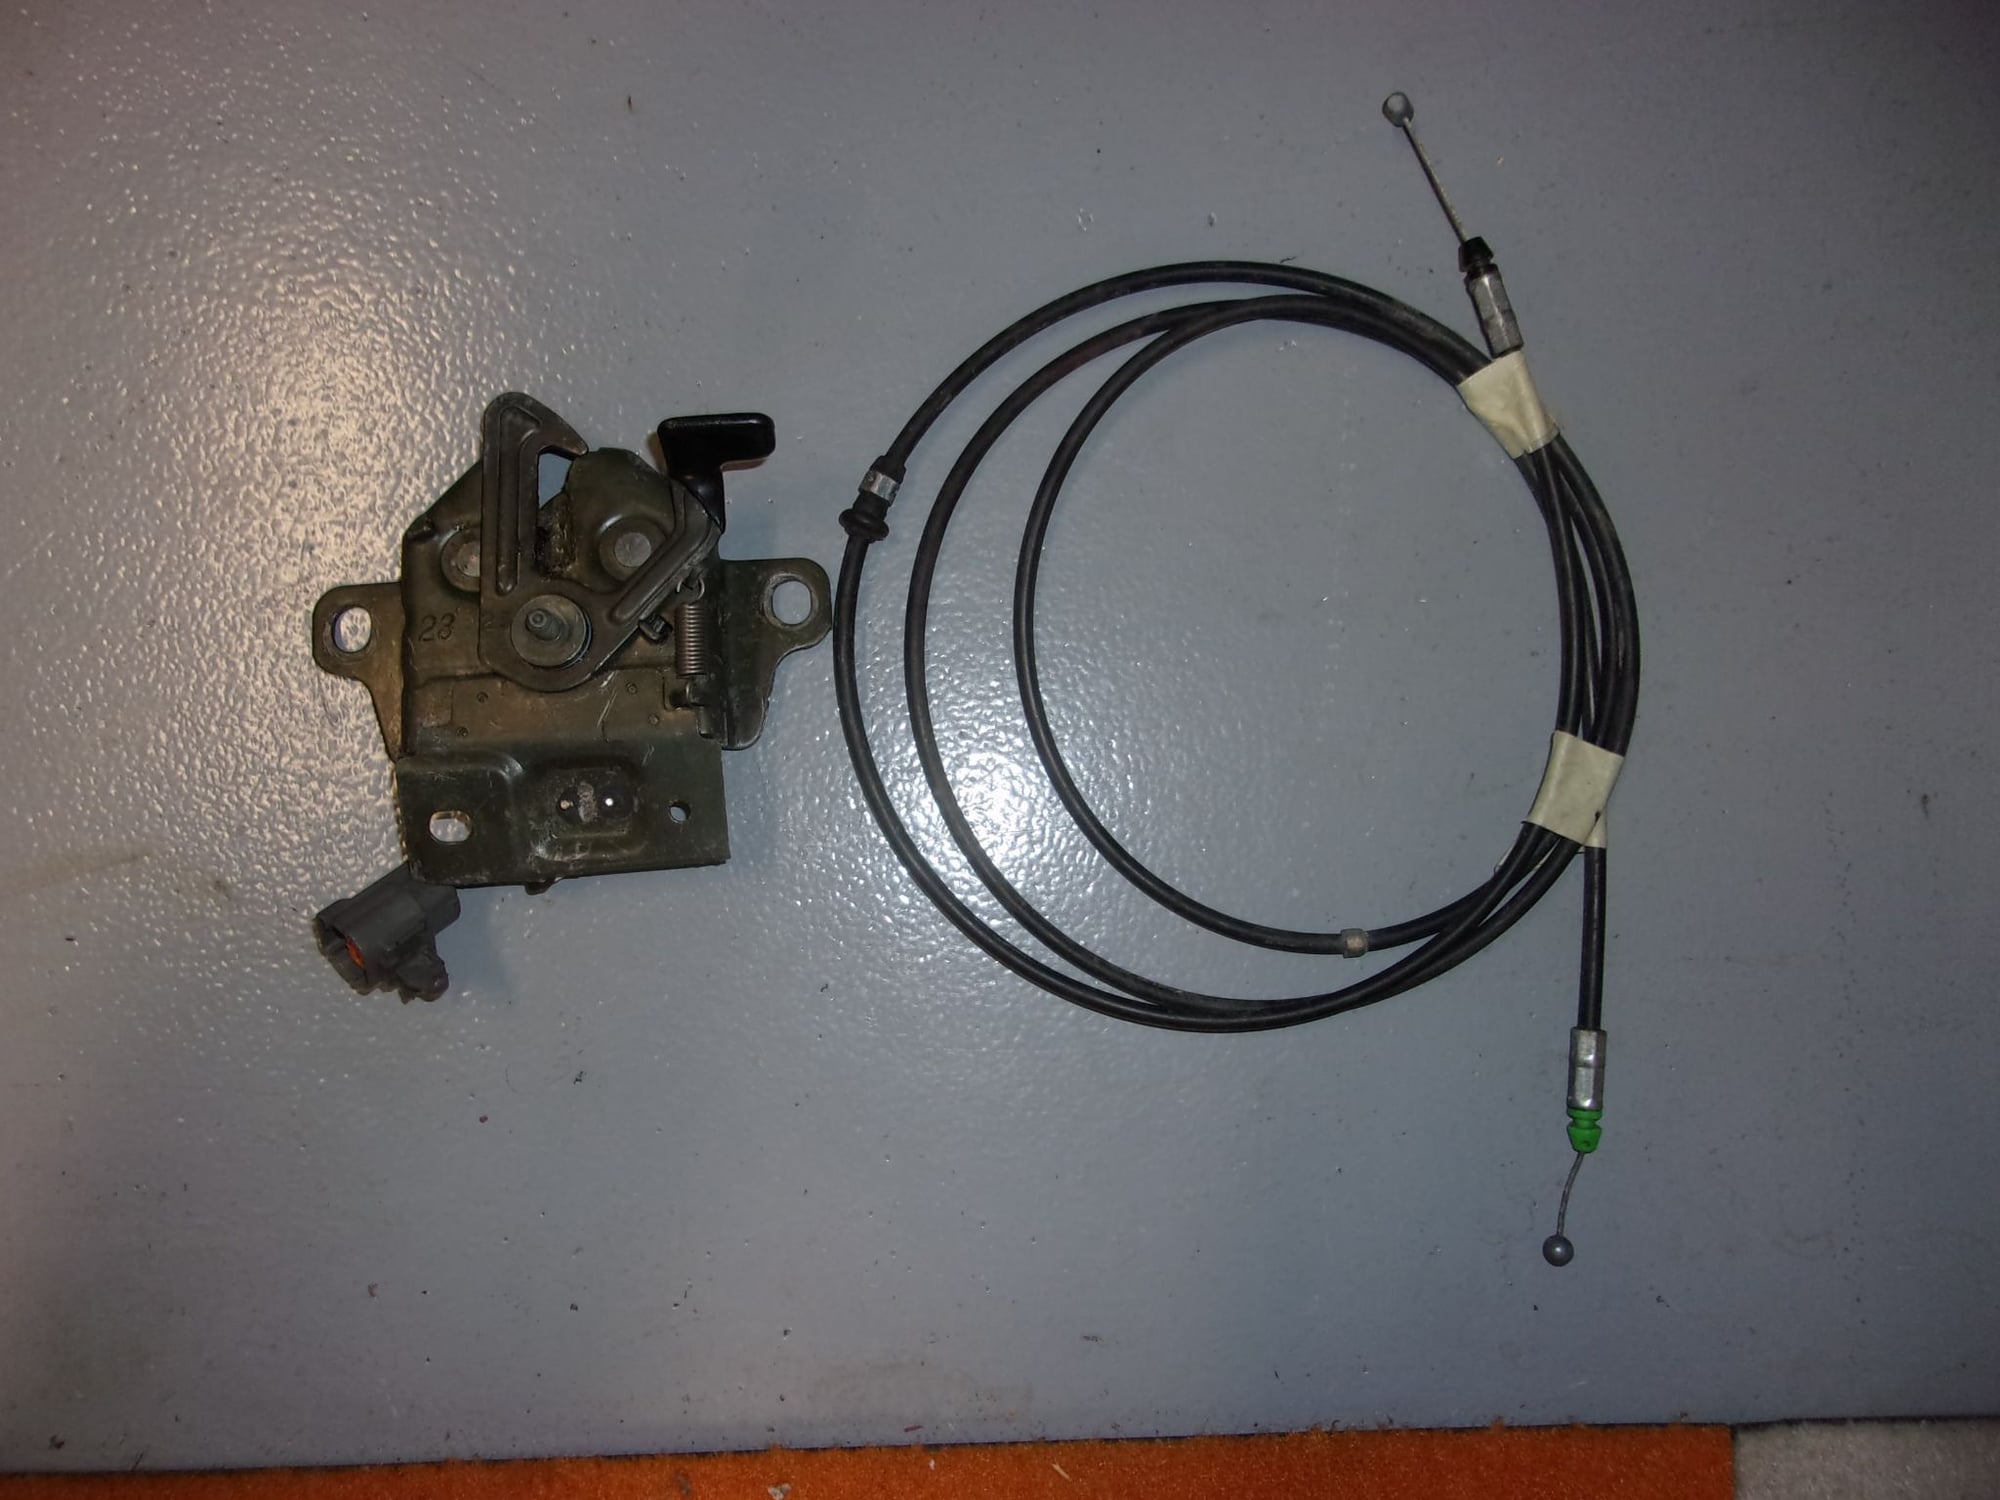 Miscellaneous - FD Hood Latch & cable - Used - 1993 to 2002 Mazda RX-7 - Murfreesboro, TN 37130, United States